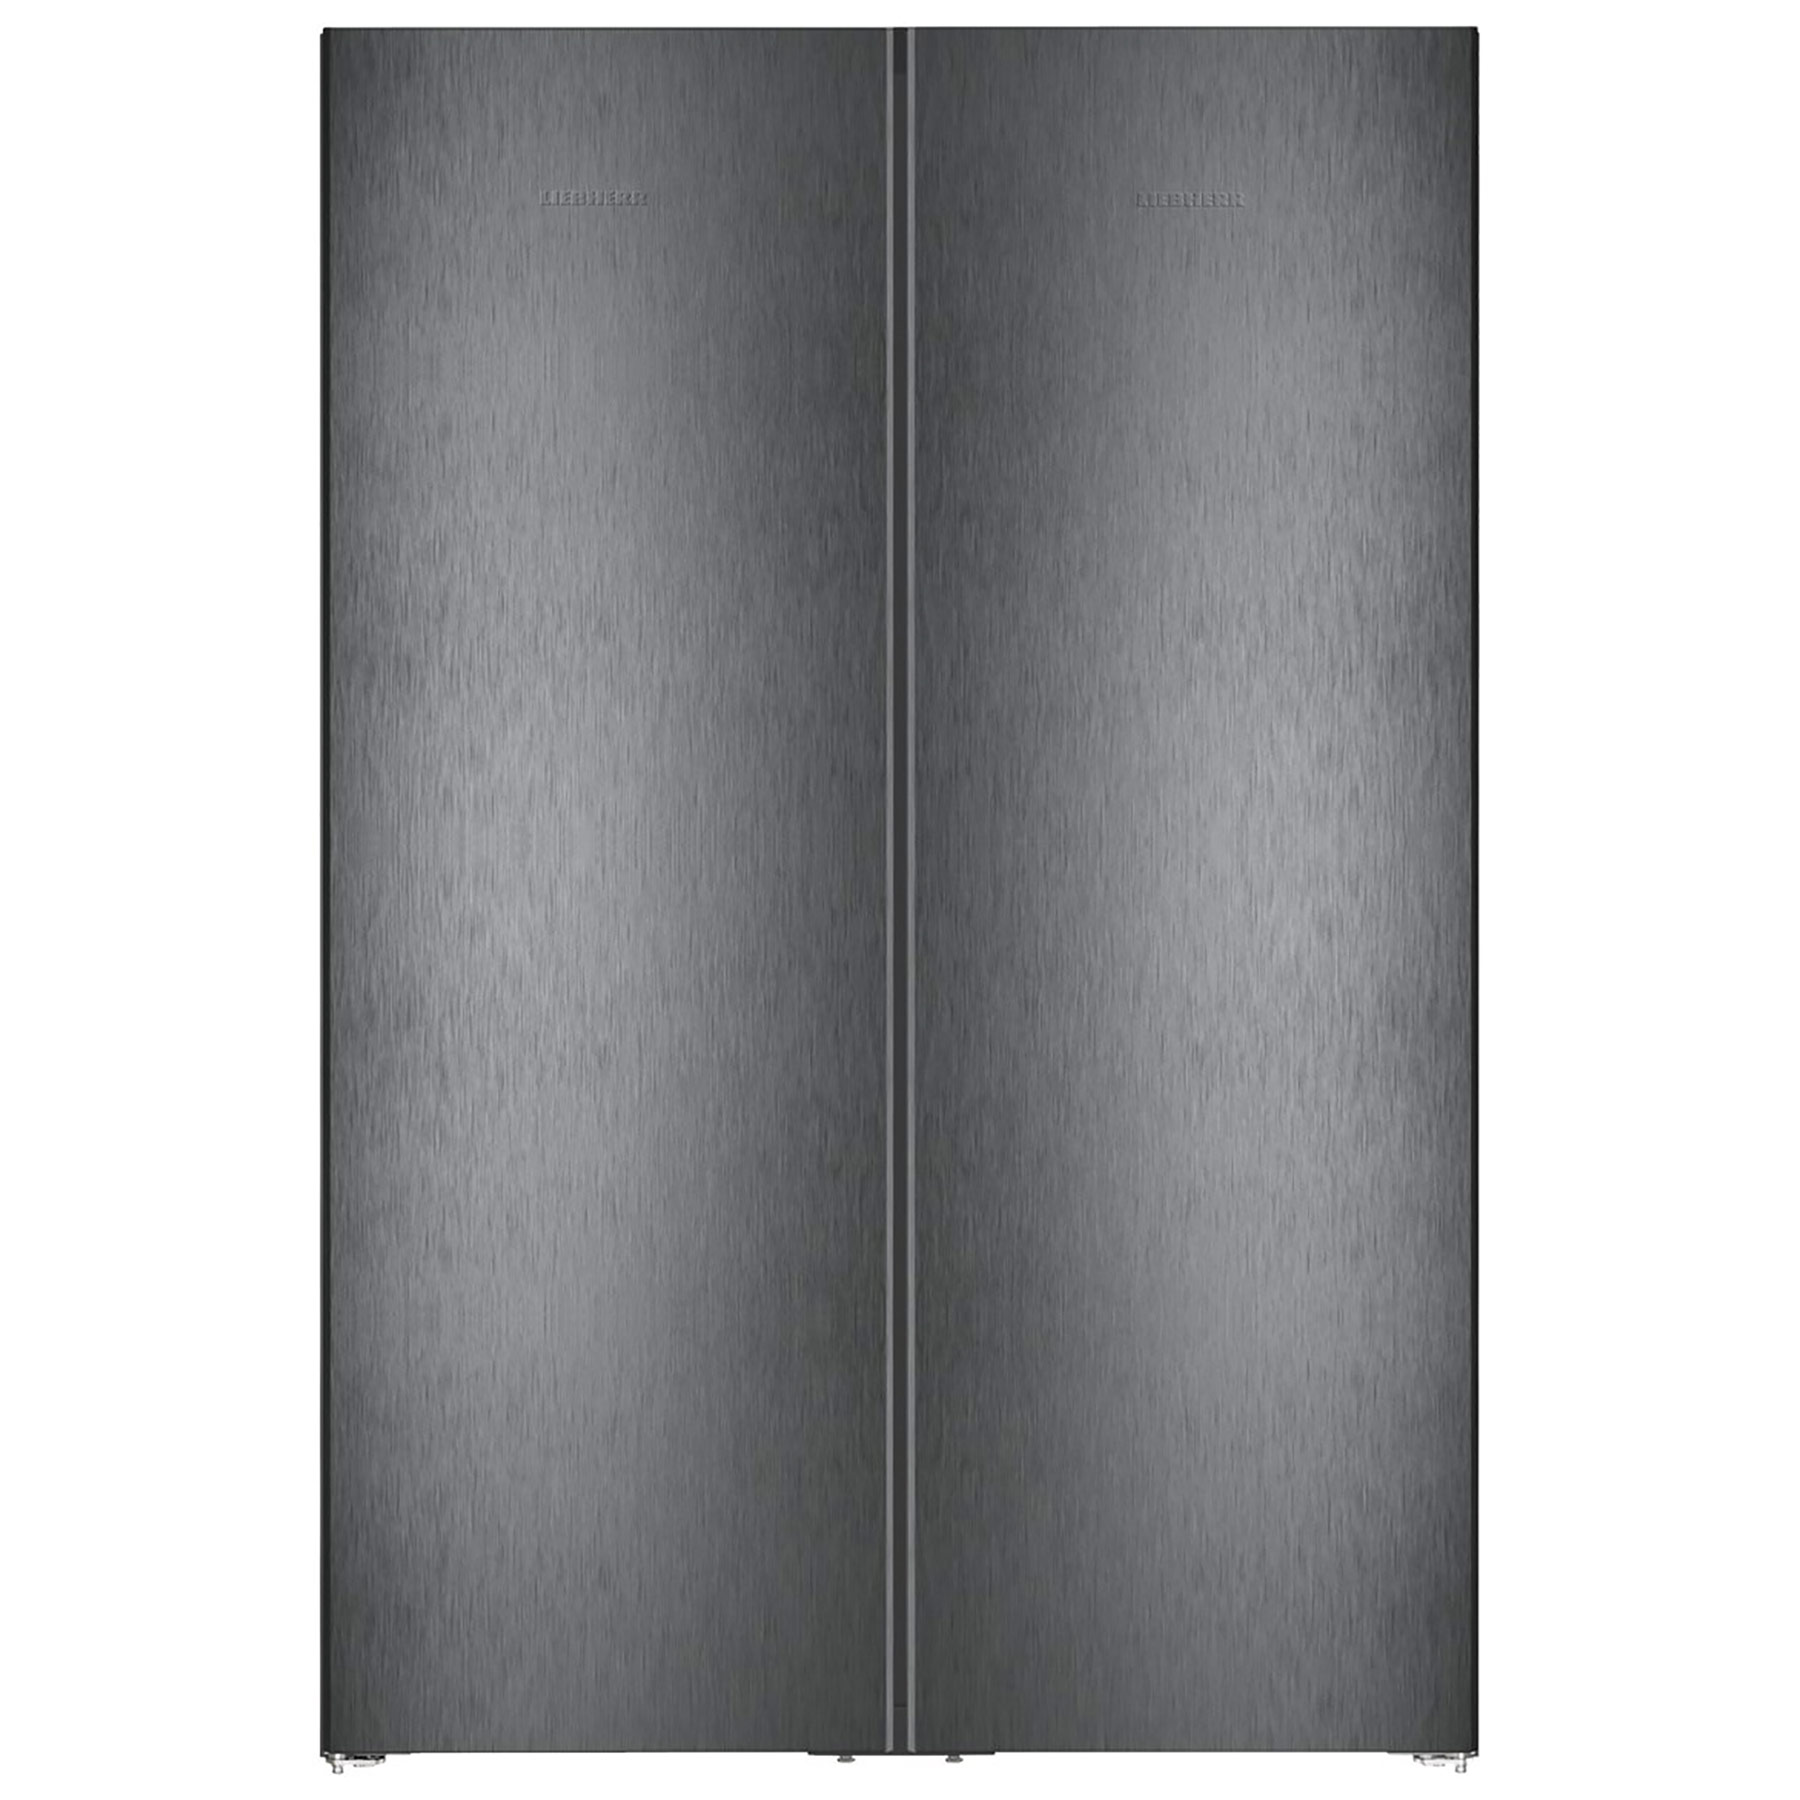 Image of Liebherr XRFBD5220 American Fridge Freezer in Black Steel D Rated